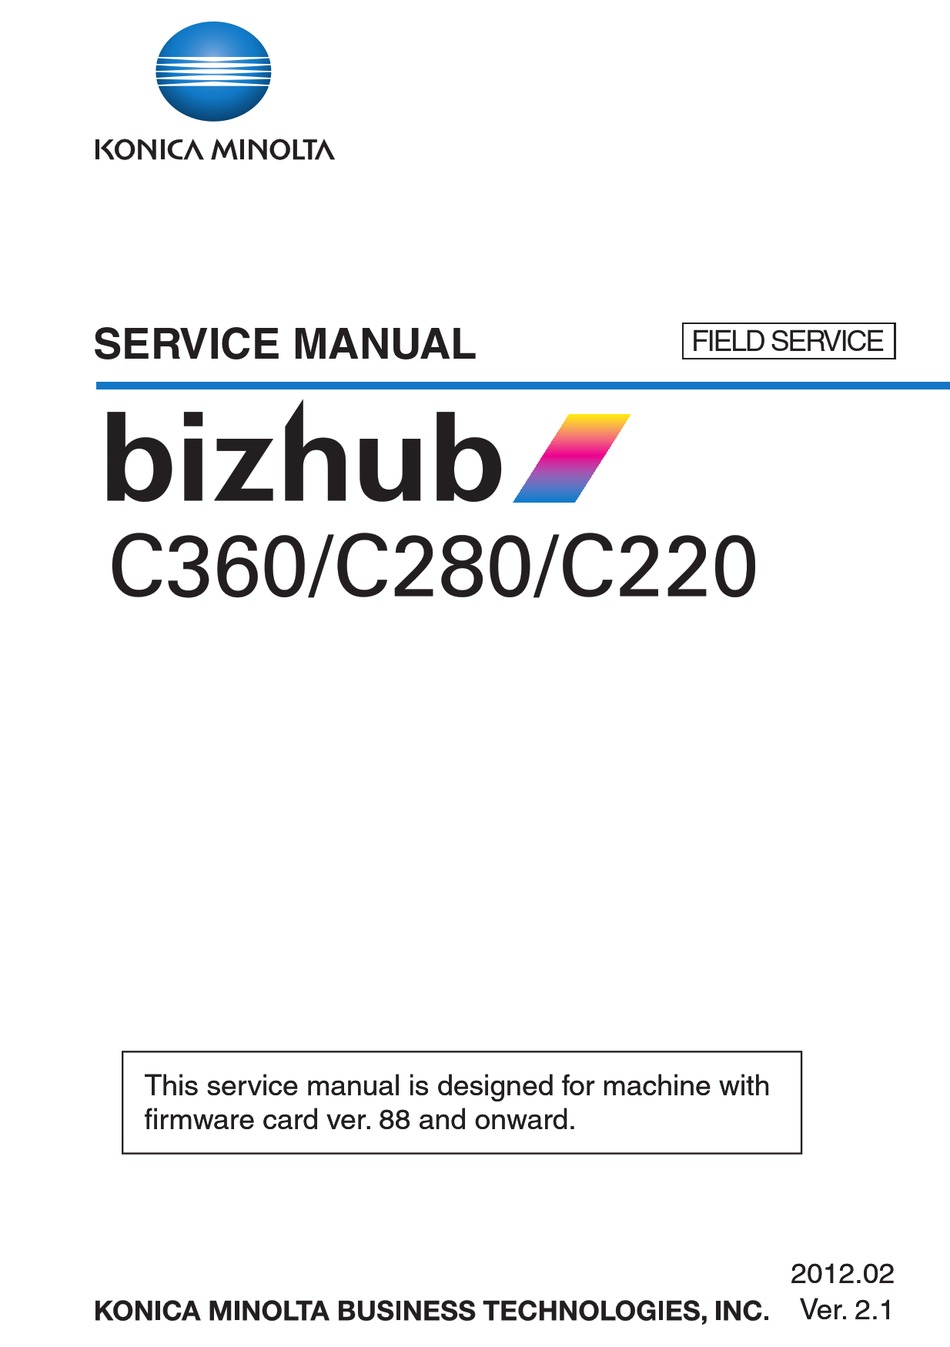 install konica driver for bizhub 1060 on mac